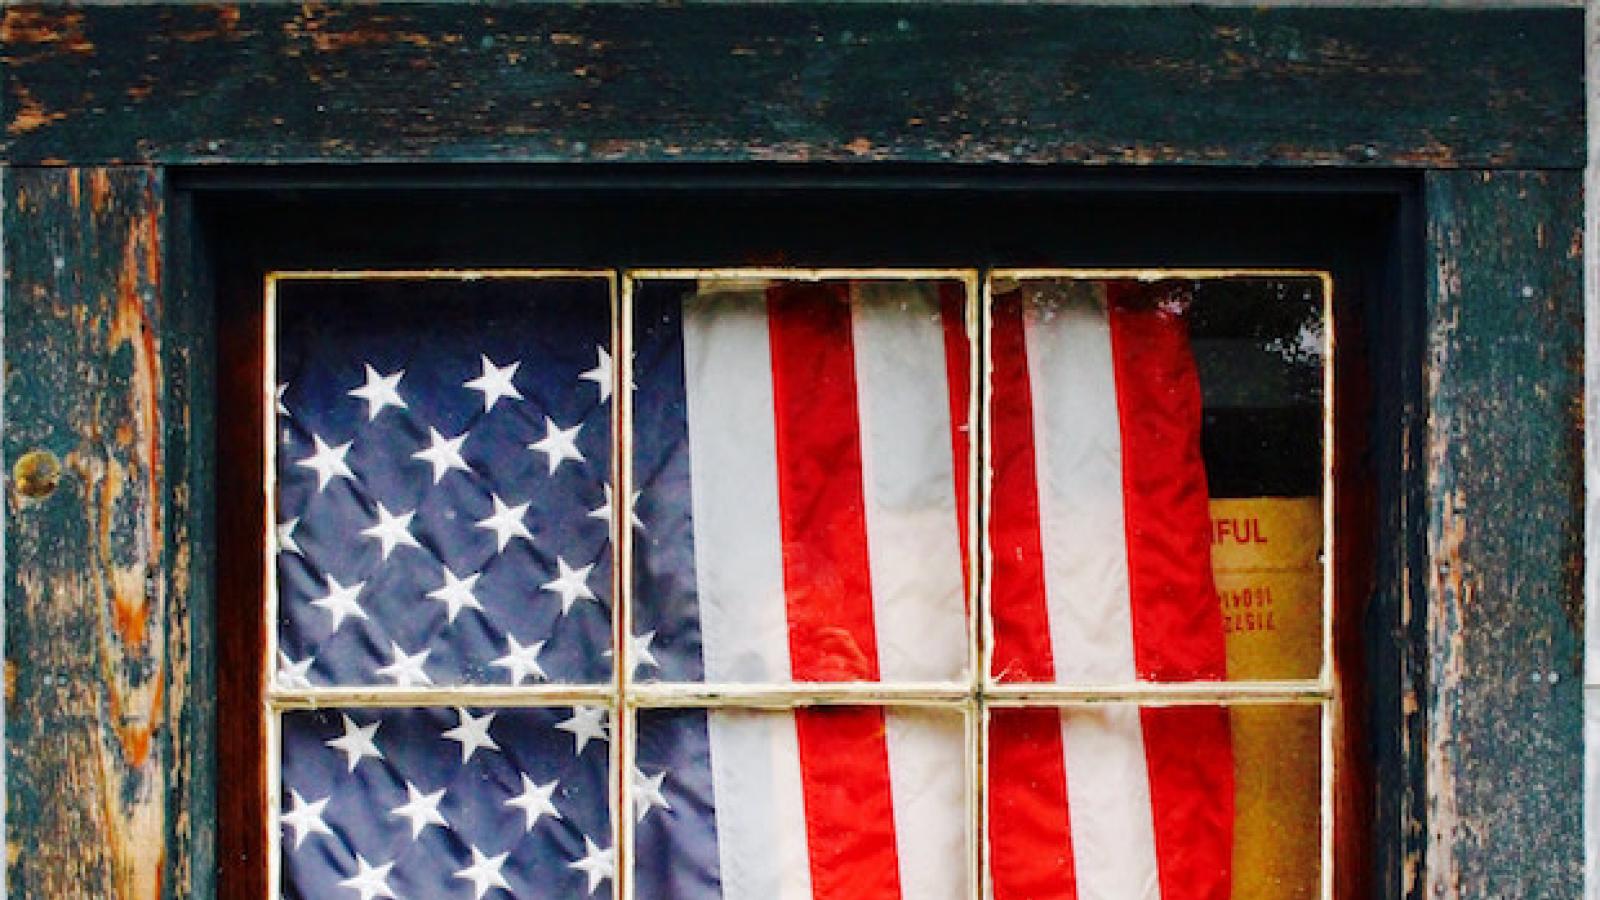 an American flag hangs curtain-like inside a blue wood-framed window